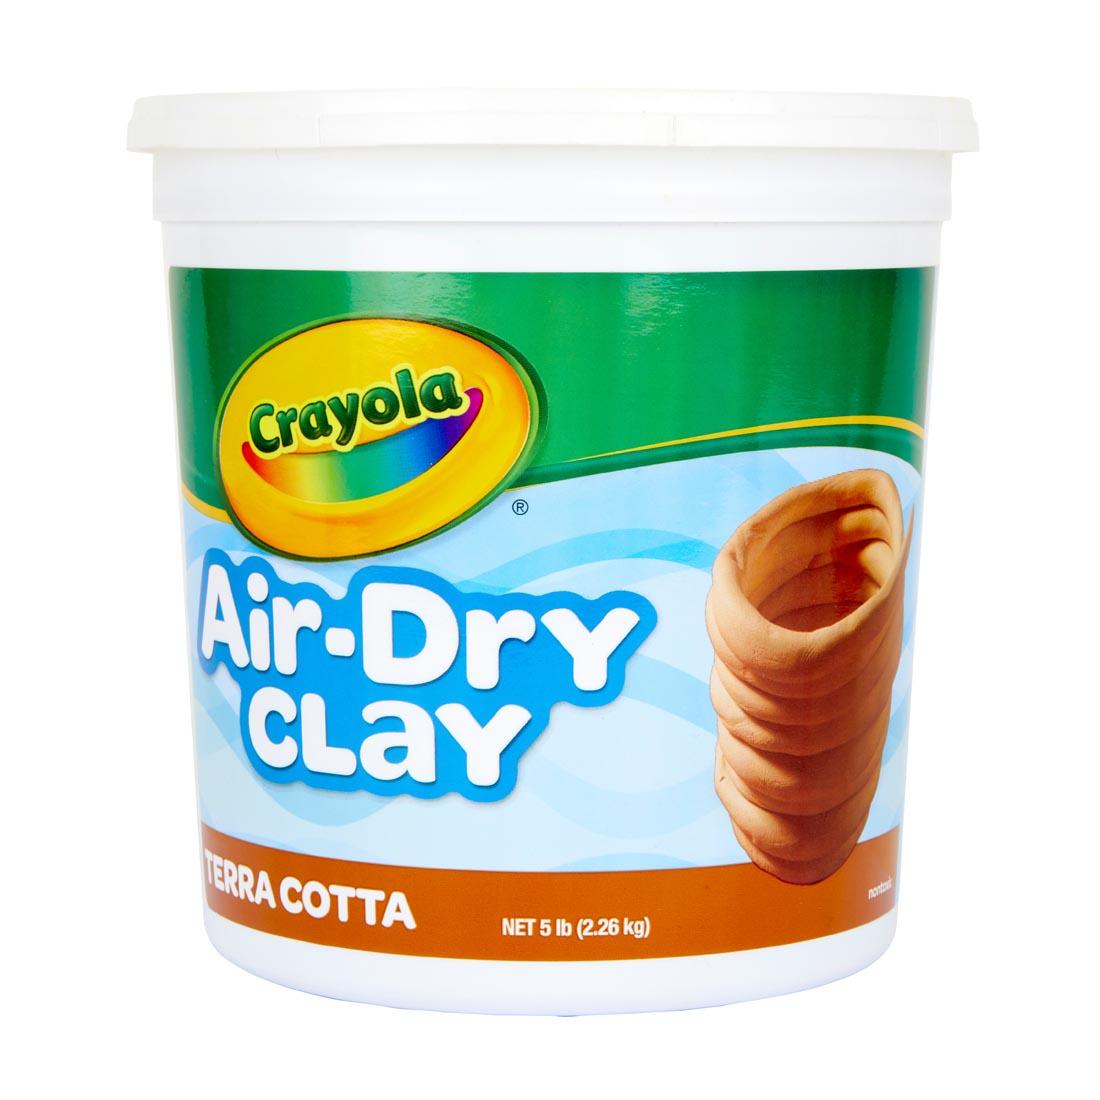 5 lb. tub of Terra Cotta Crayola Air-Dry Clay